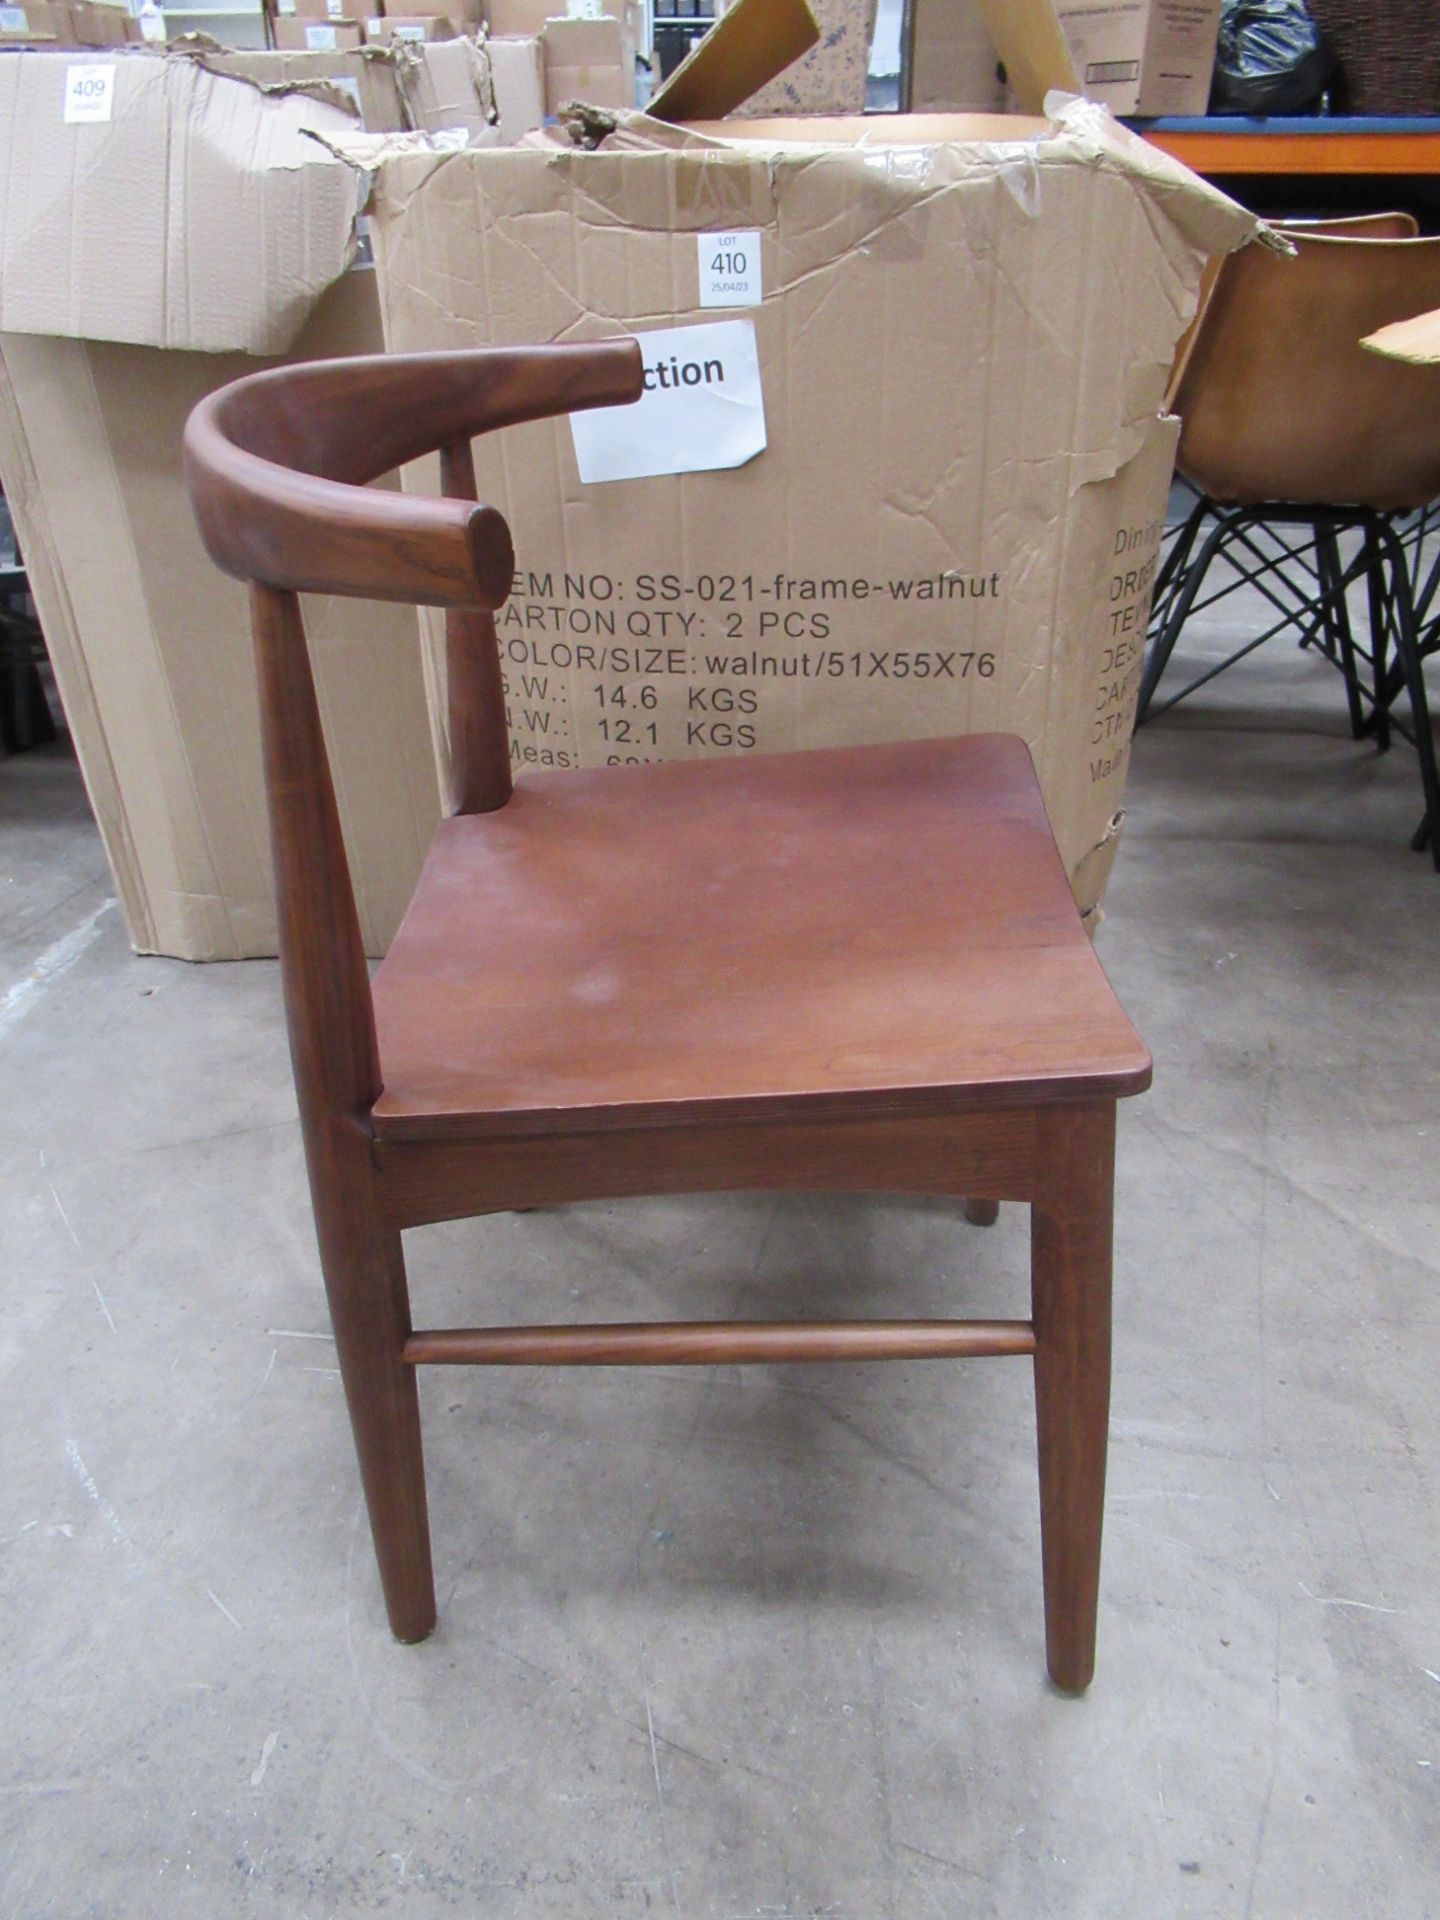 2x Cow Horn Chair Frames - colour Walnut - Image 3 of 3